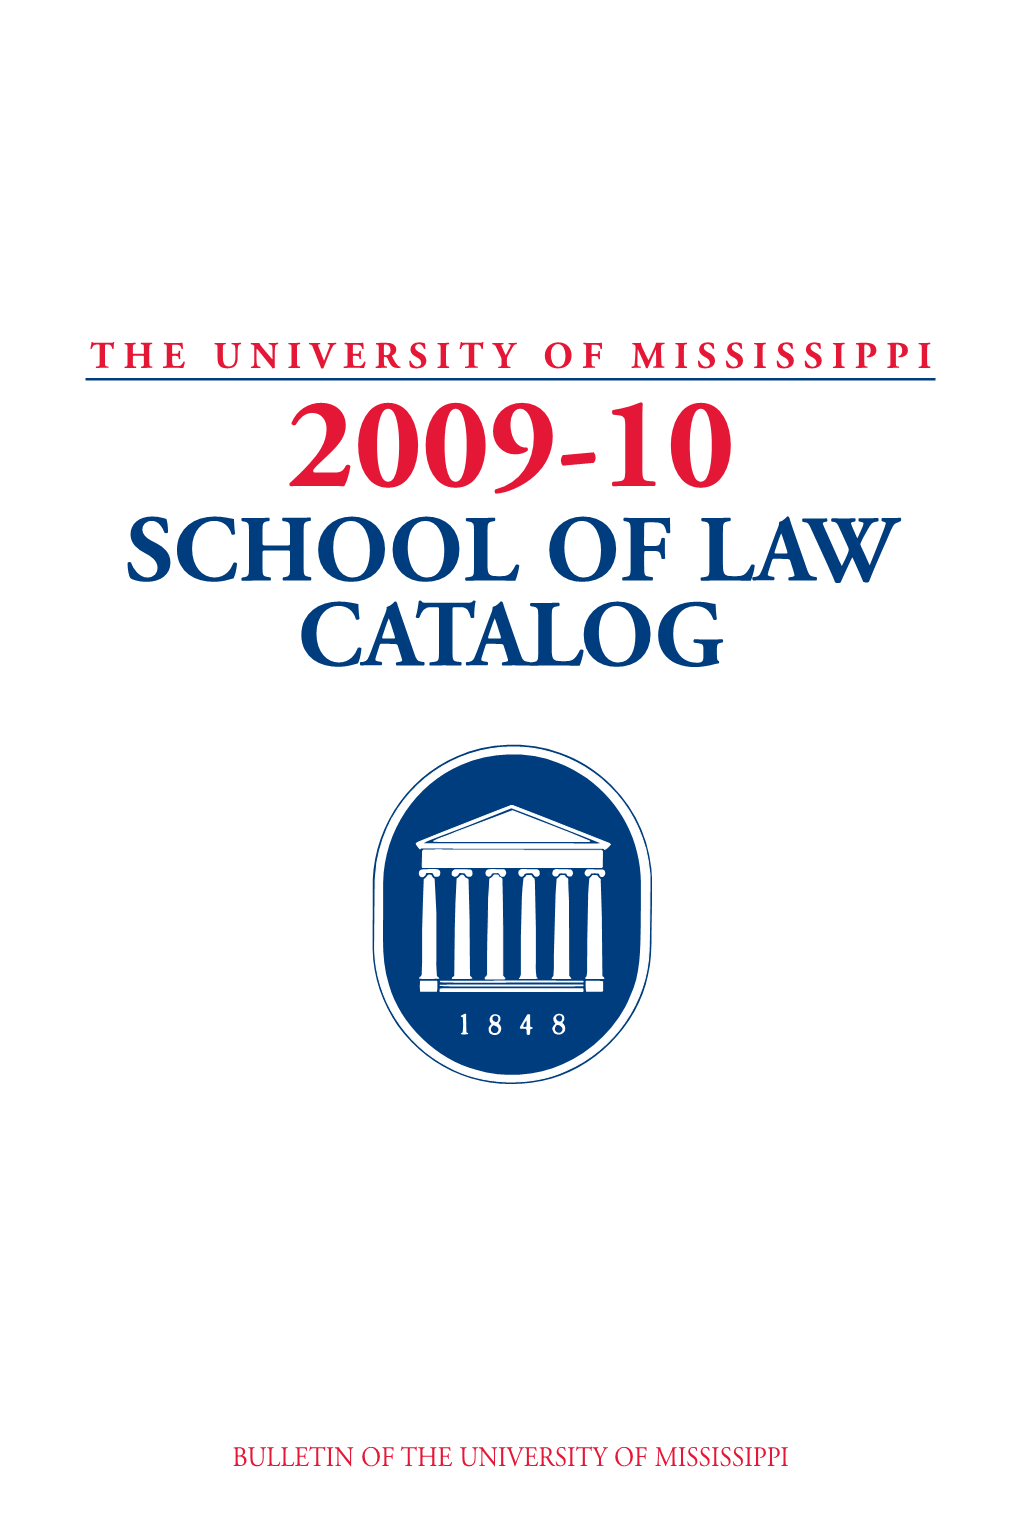 School of Law Catalog the UNIVERSITY of MISSISSIPPI Bulletin of the University of Mississippi P.O